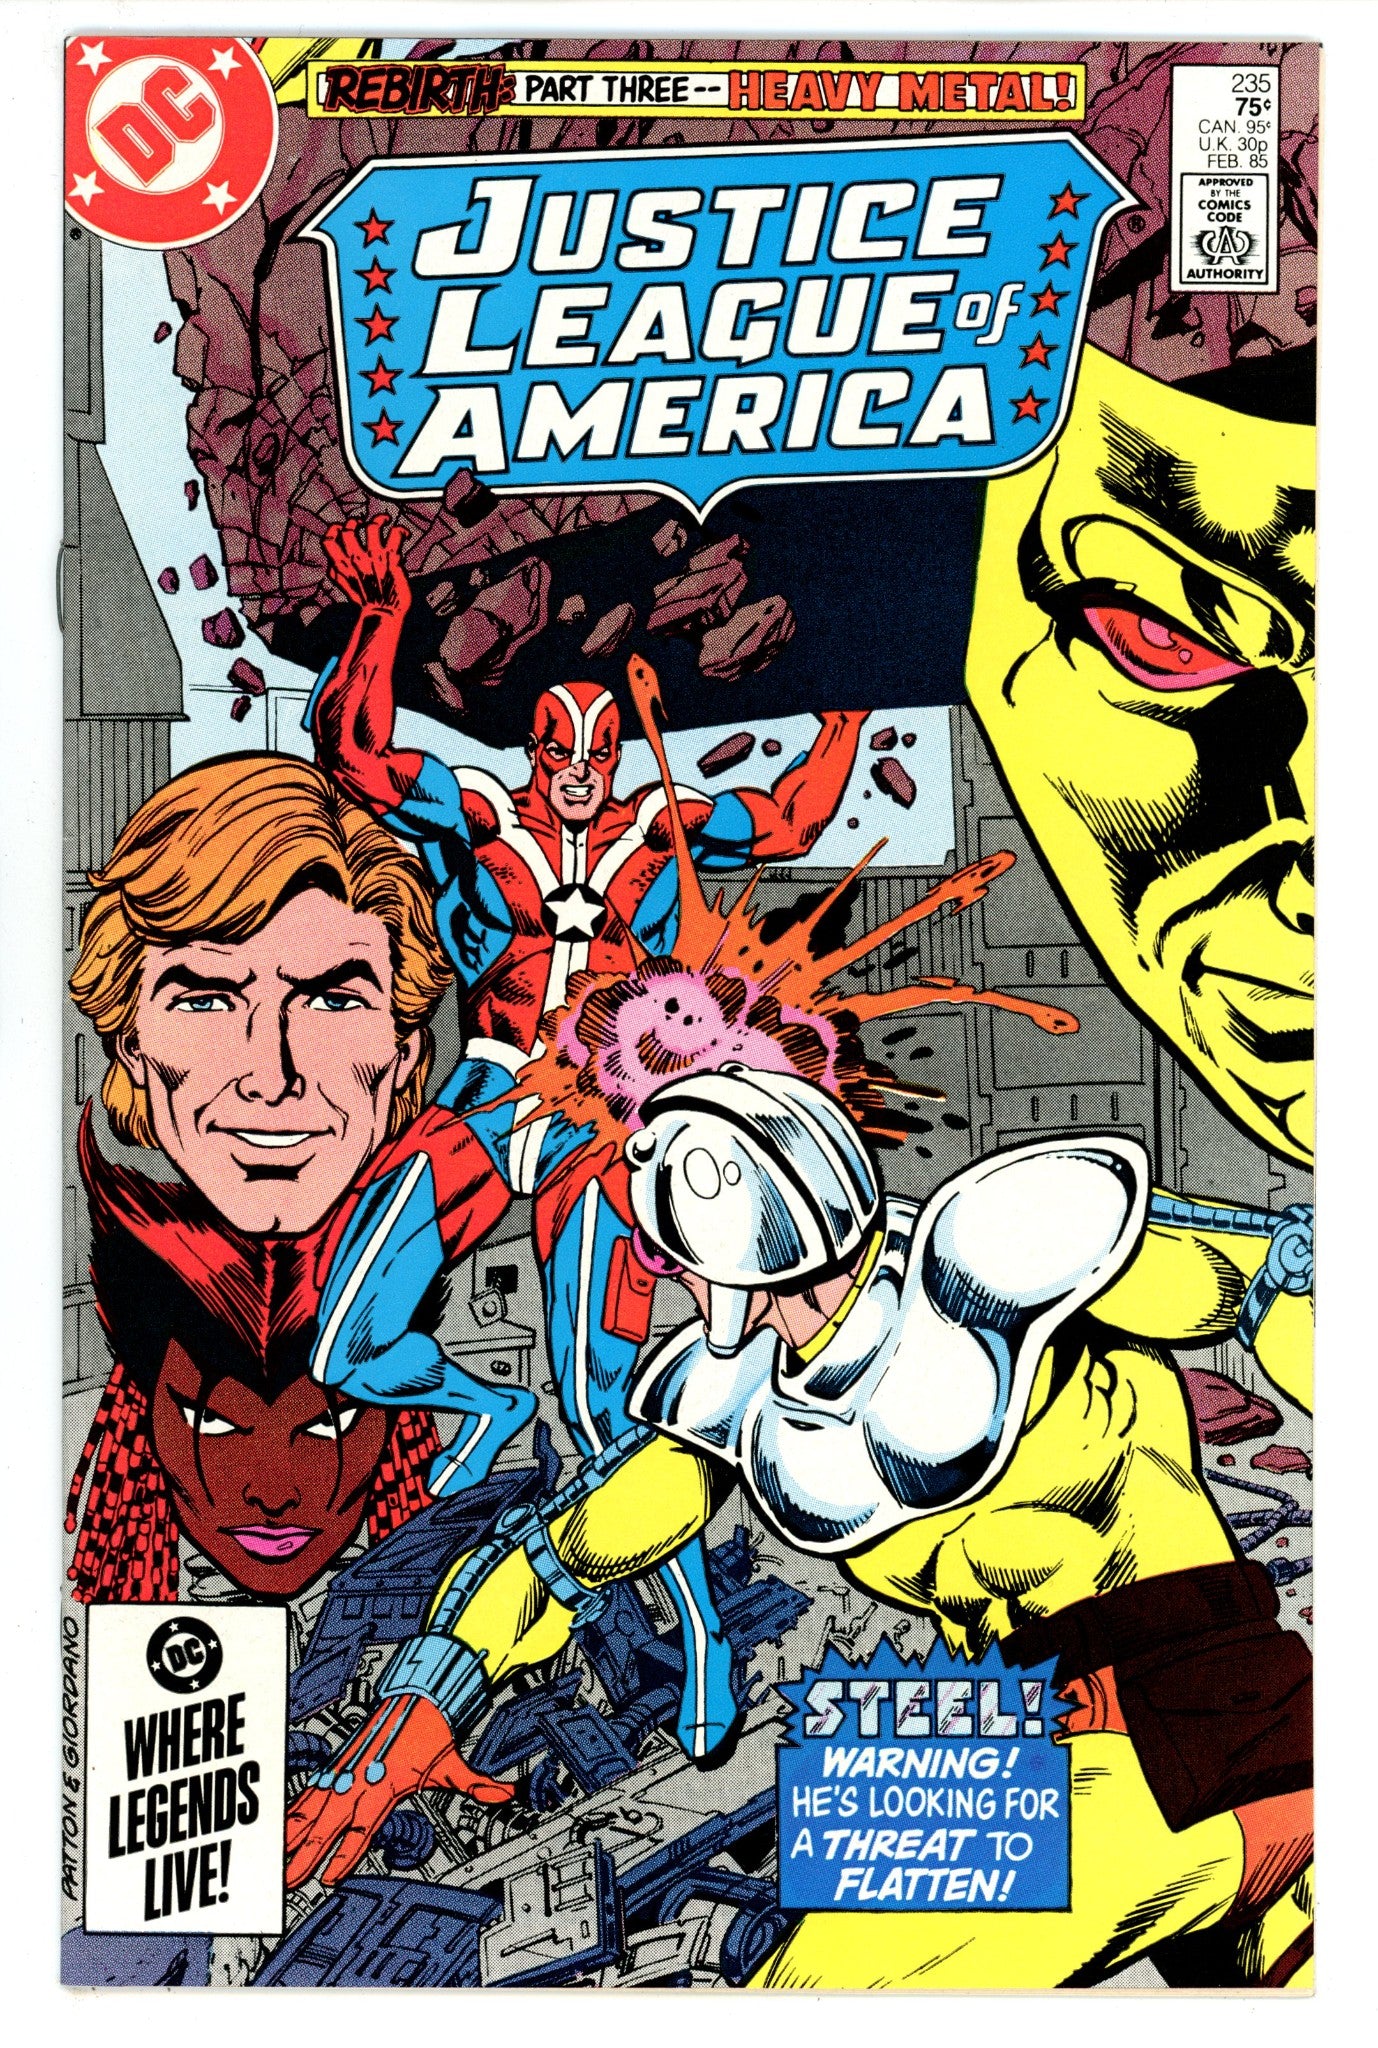 Justice League of America Vol 1 235 High Grade (1985) 